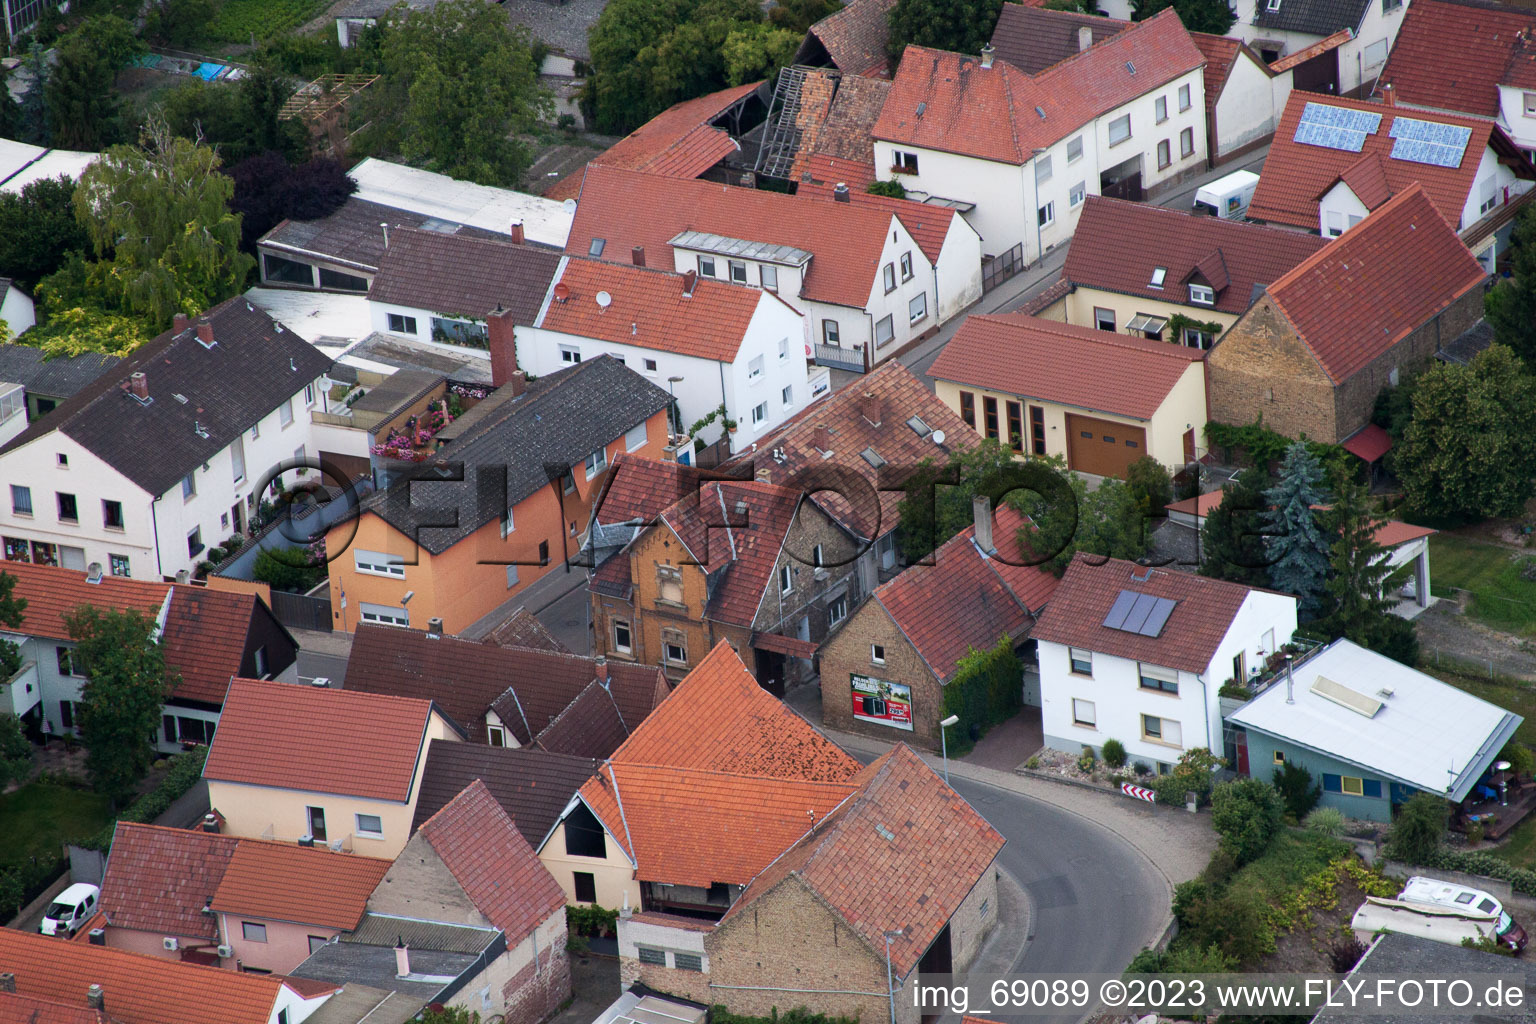 District Bobenheim in Bobenheim-Roxheim in the state Rhineland-Palatinate, Germany out of the air